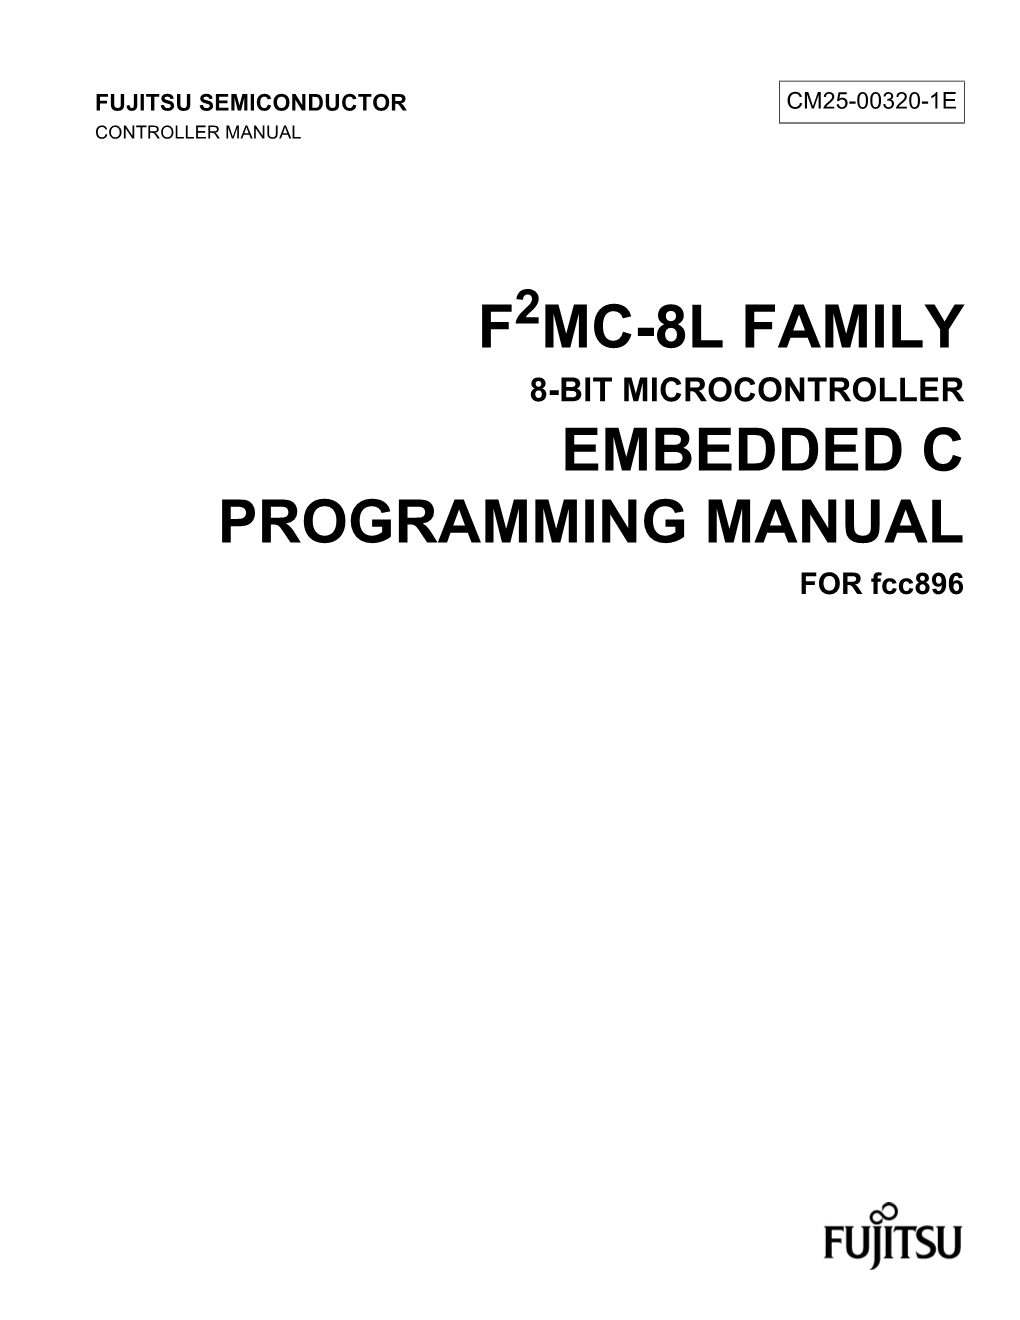 F Mc-8L Family Embedded C Programming Manual